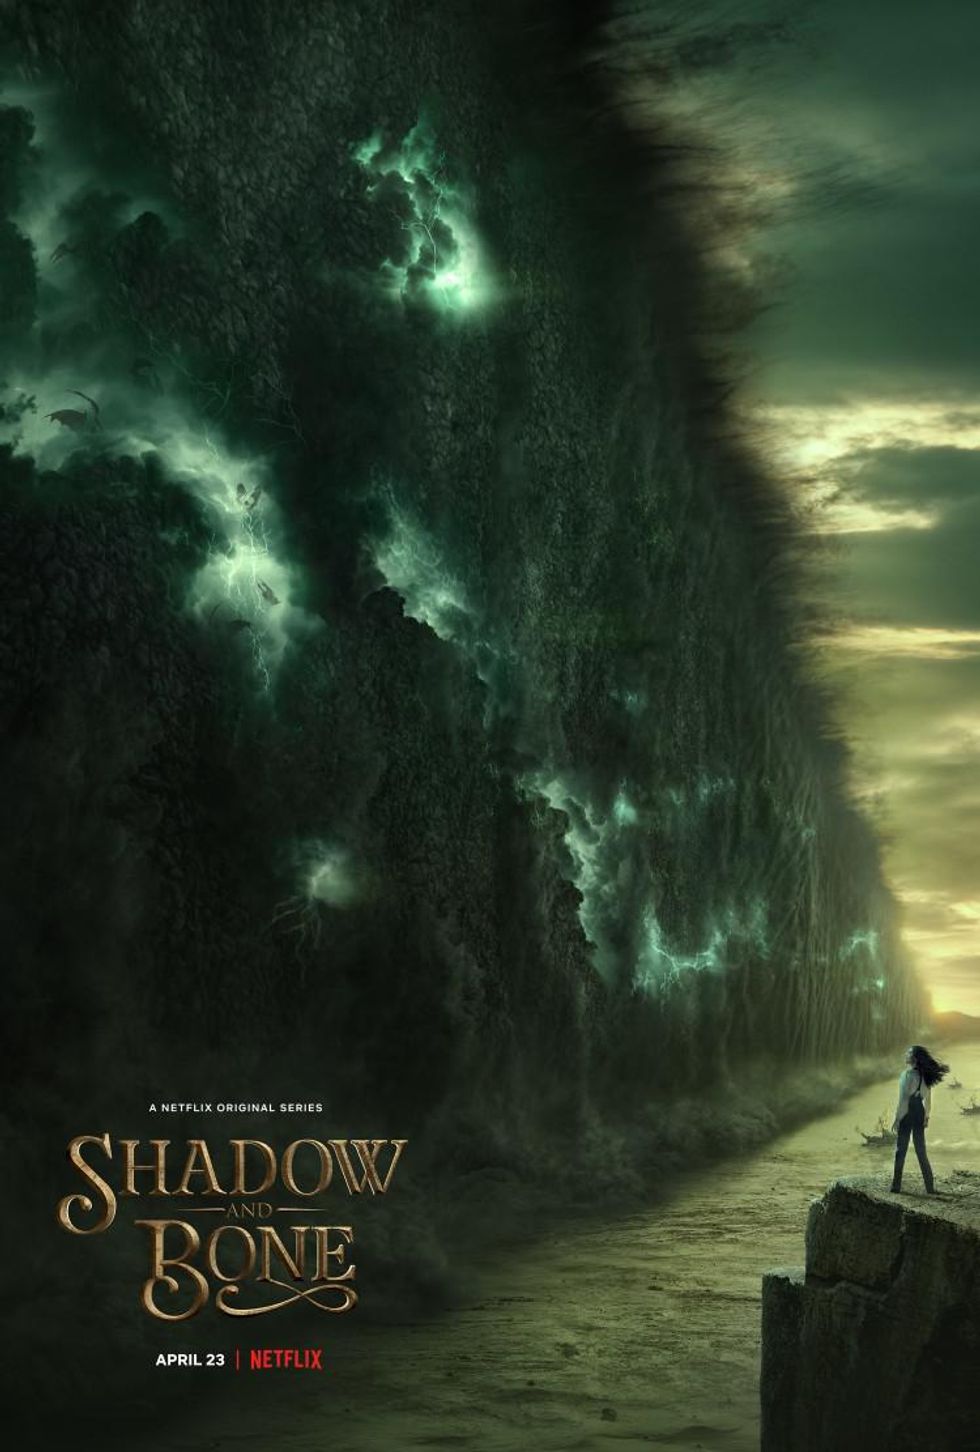 Watch the Trailer for Netflix's YA Fantasy Series 'Shadow and Bone'